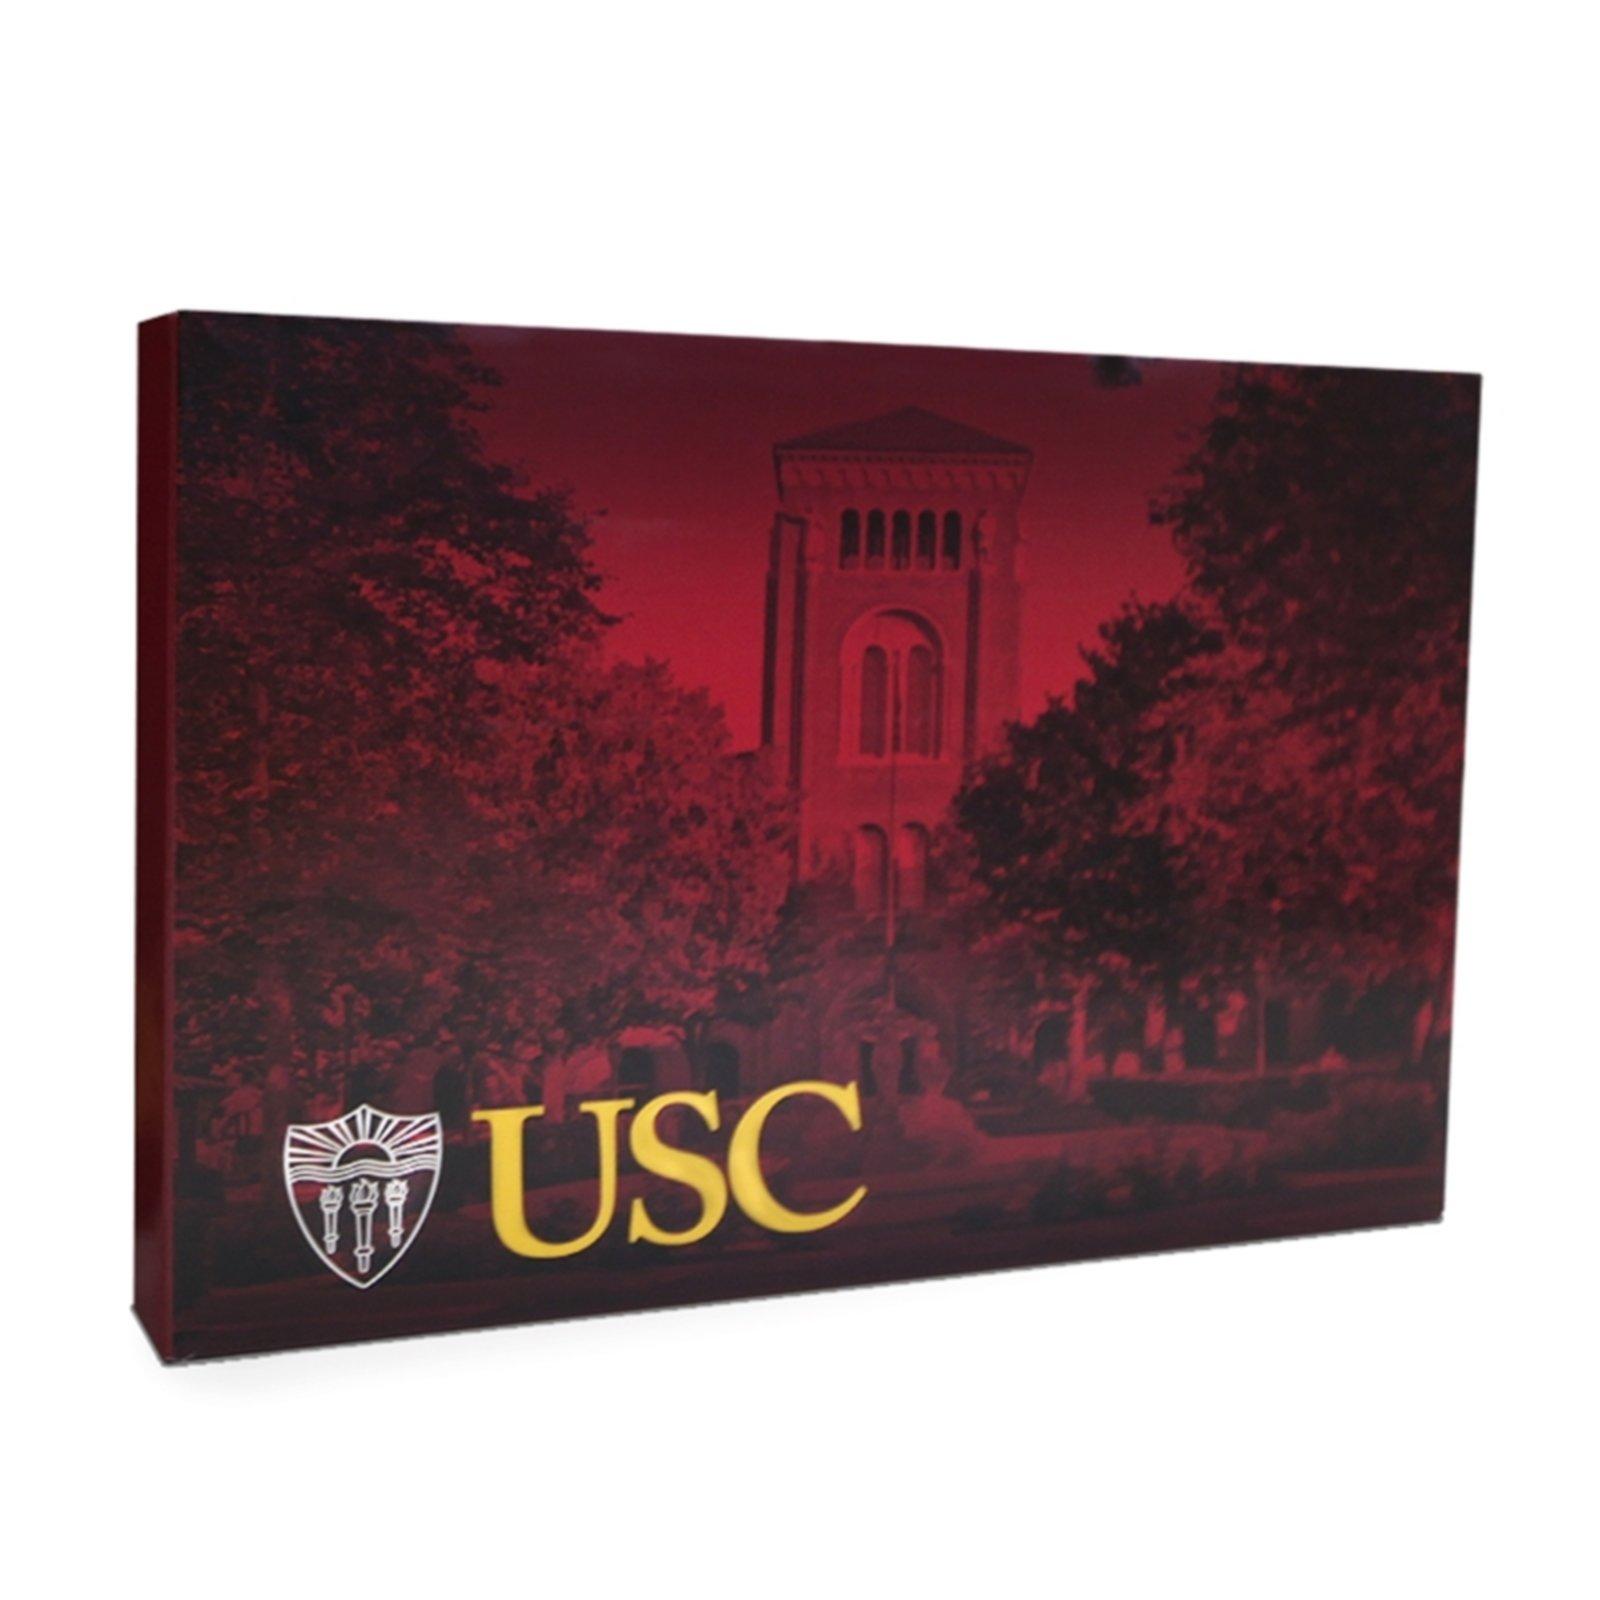 USC Shield Bovard Gift Box image01